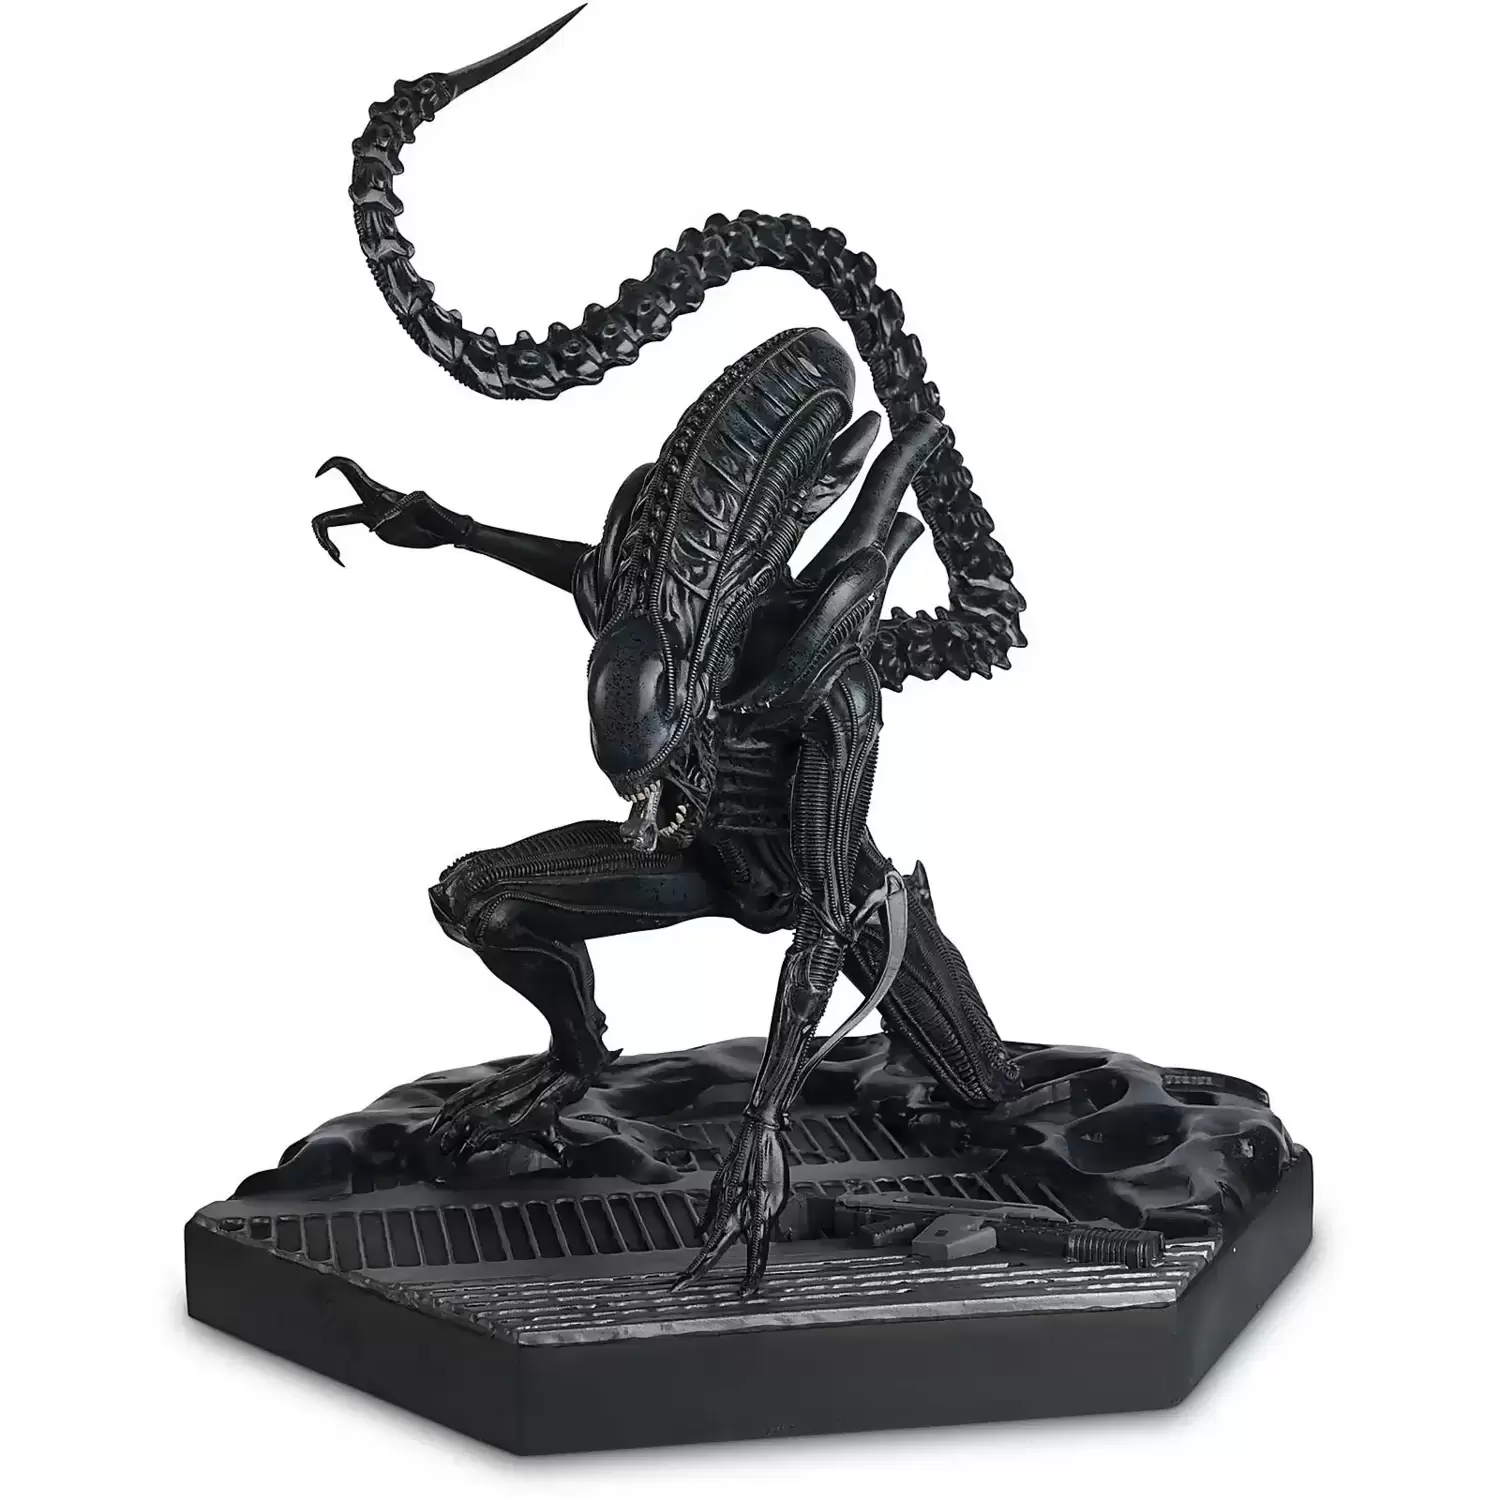 https://www.coleka.com/media/item/202203/31/the-alien-predator-figurine-collection-alien-xenomorph-warrior-mega.webp